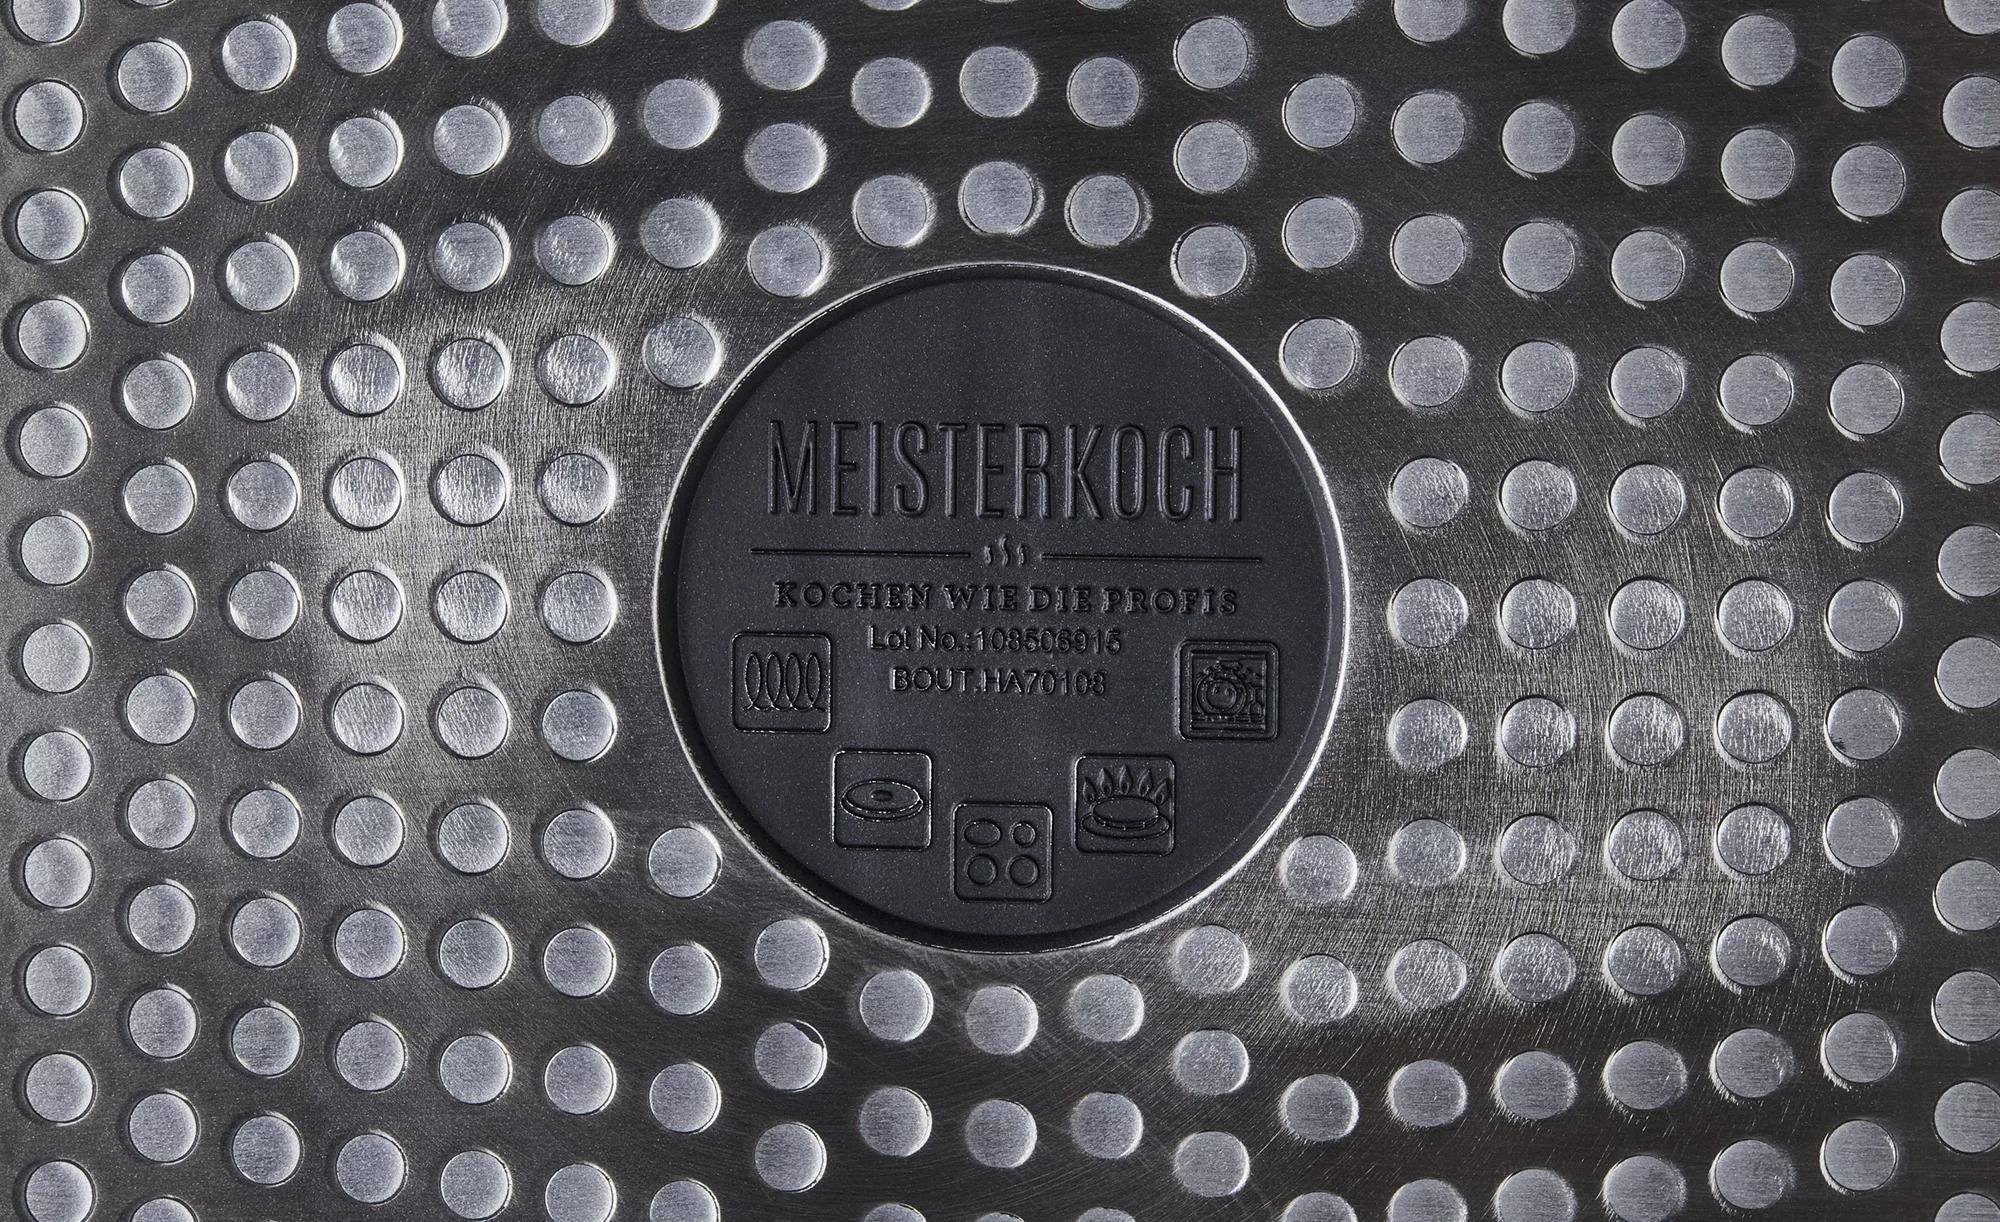 Meisterkoch Bräter oval, 3-teilig  GUSTUS ¦ schwarz ¦ Aluminium-Guss ¦ Maße günstig online kaufen